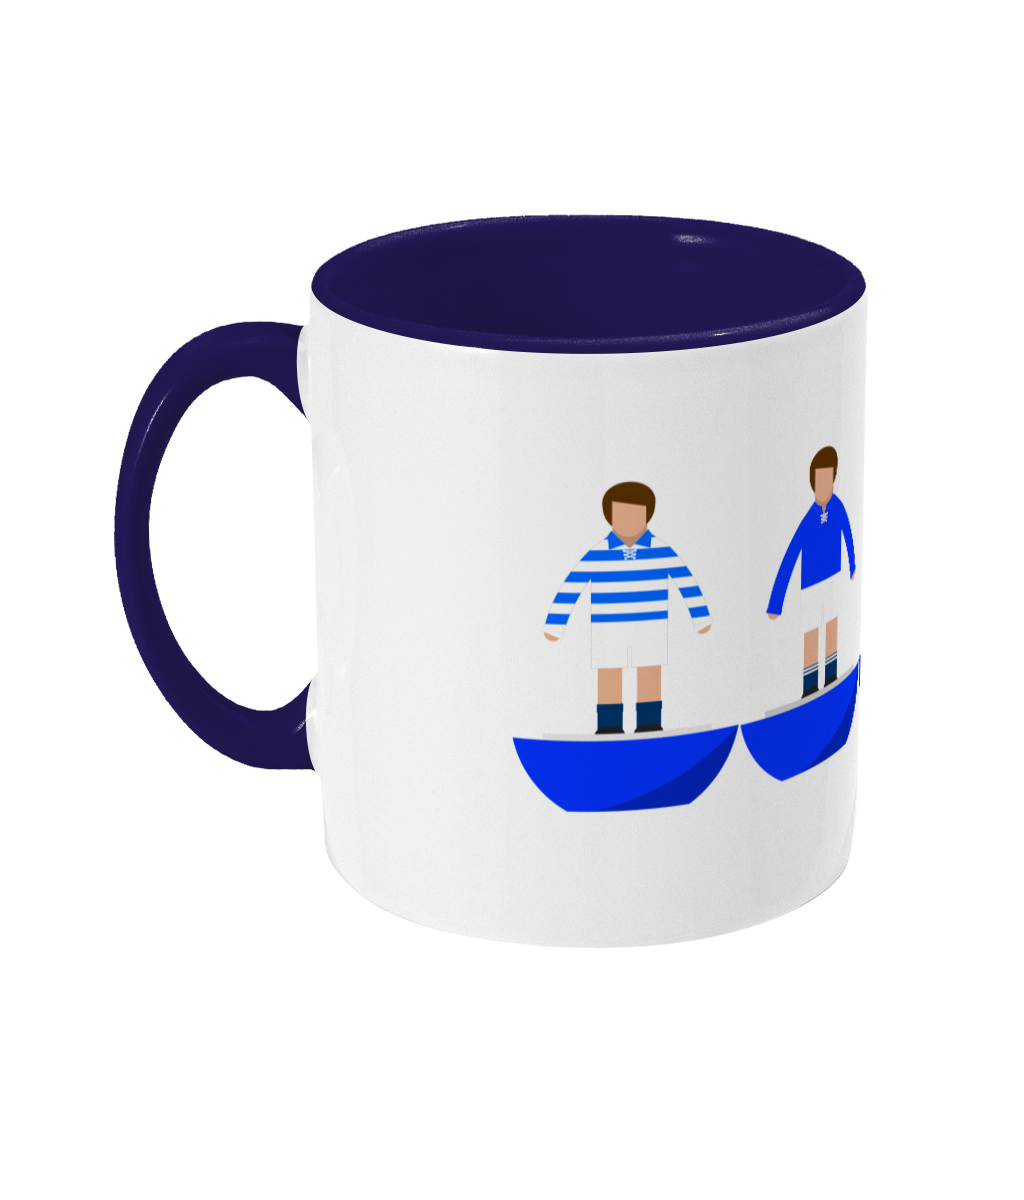 Football Kits 'Bristol Rovers combined' Mug